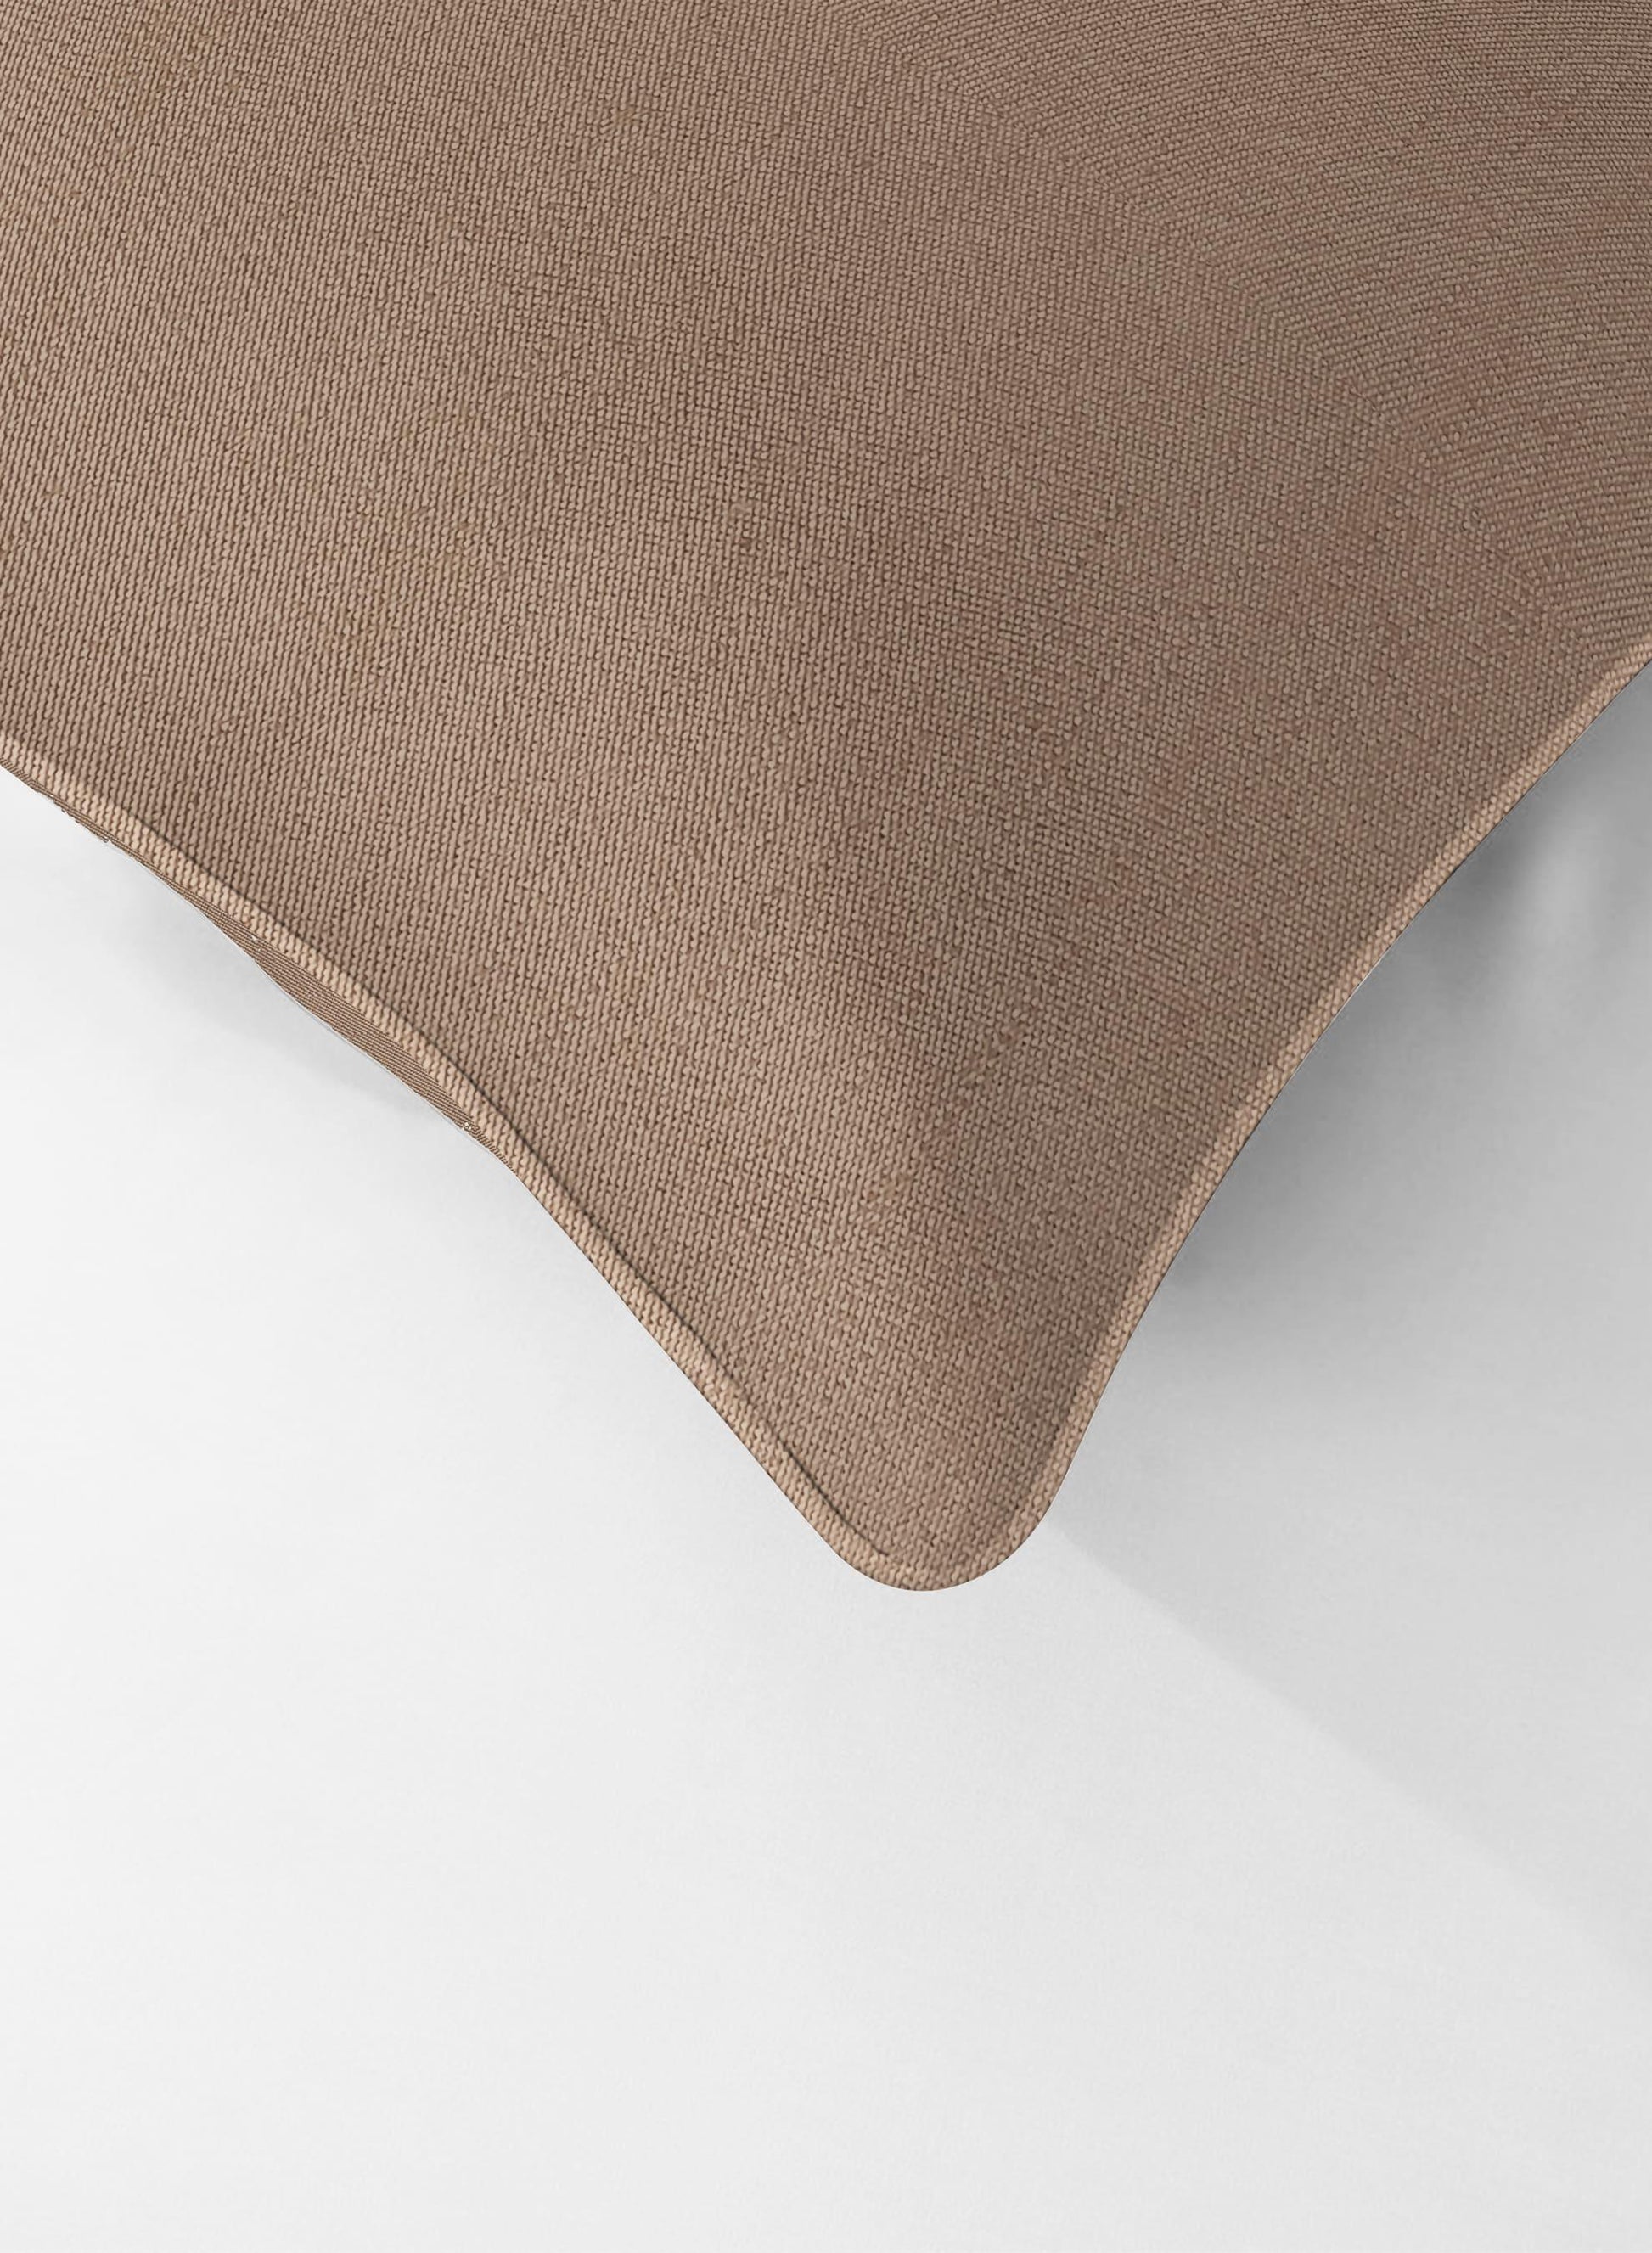 Lyon Cushion Cover | Brown - Home Crayons